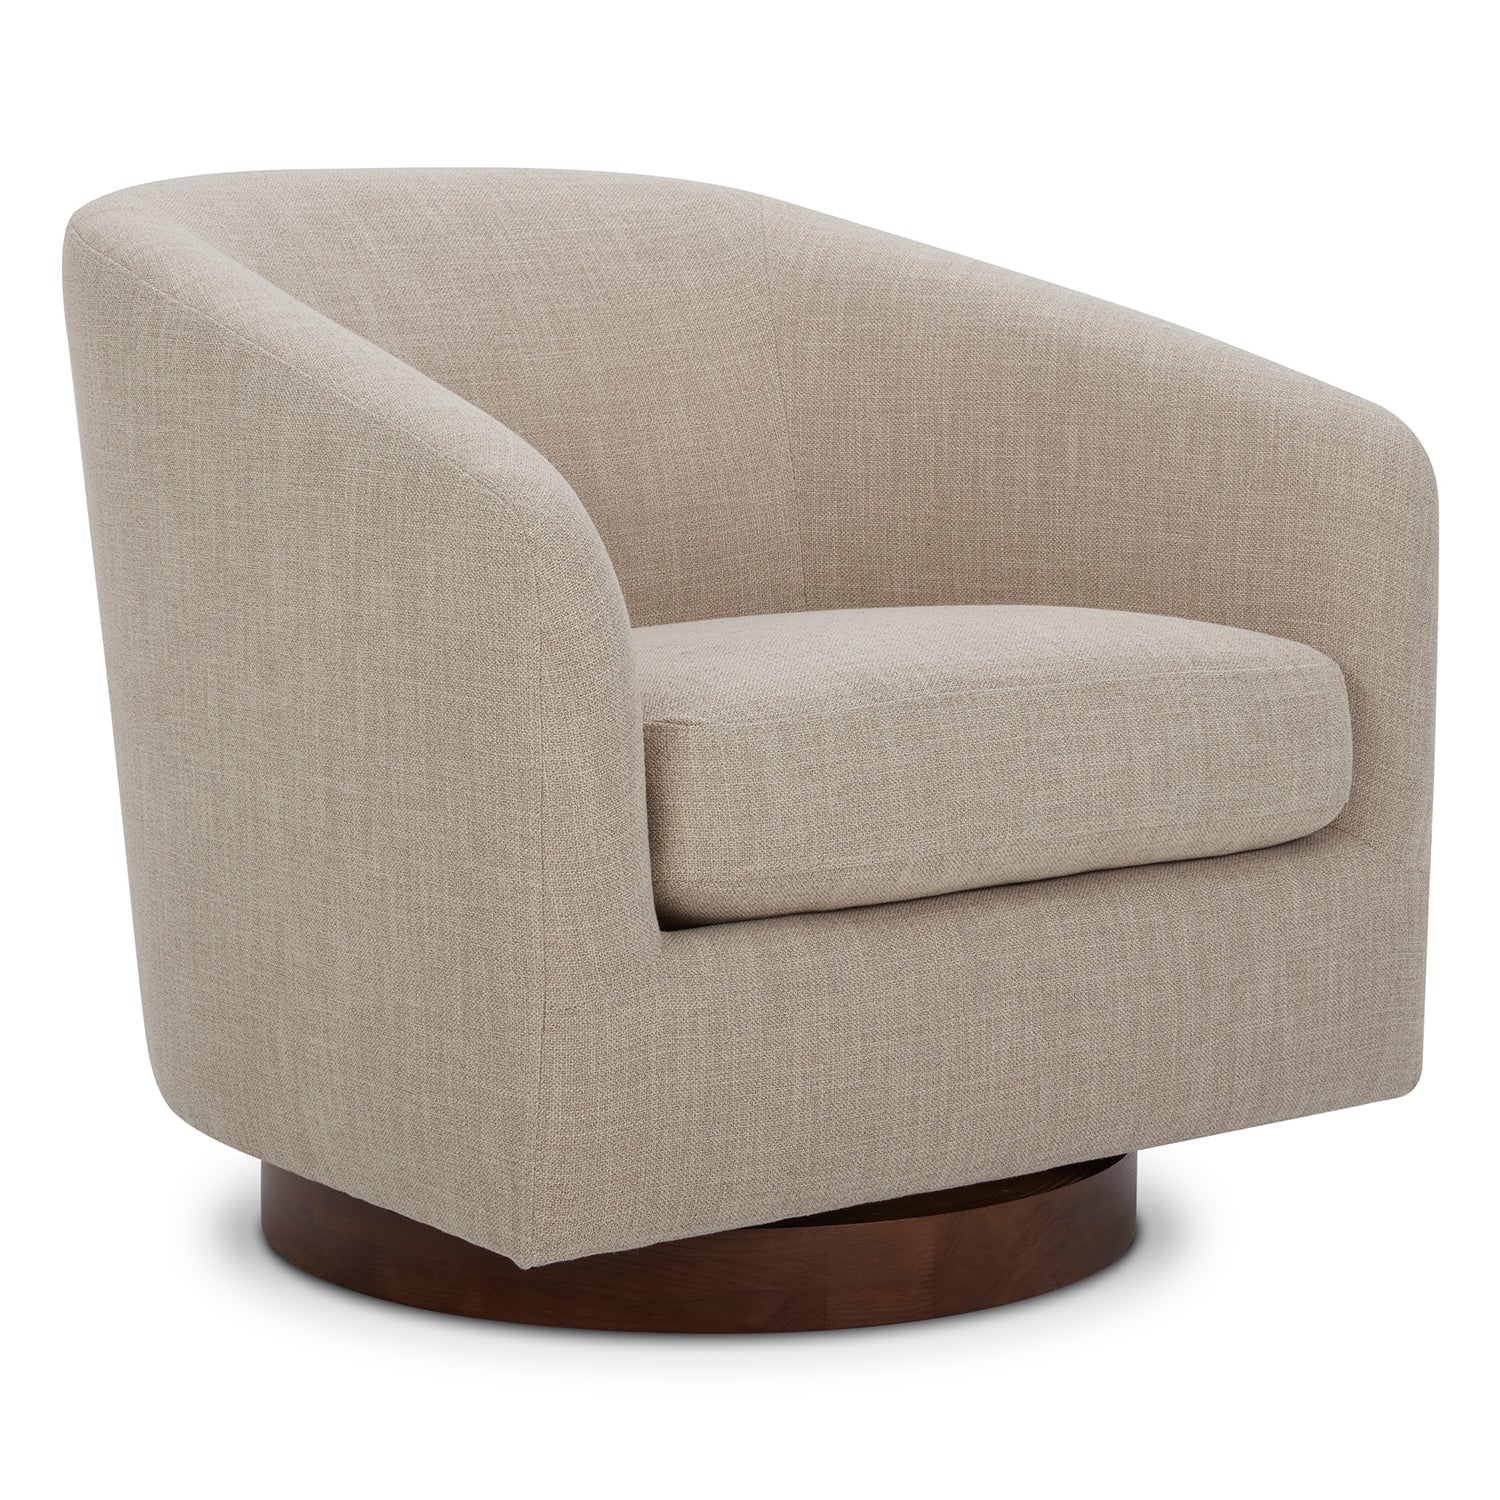 CHITA LIVING-Wren Modern Swivel Accent Chair-Accent Chair-Fabric-Flax Beige-